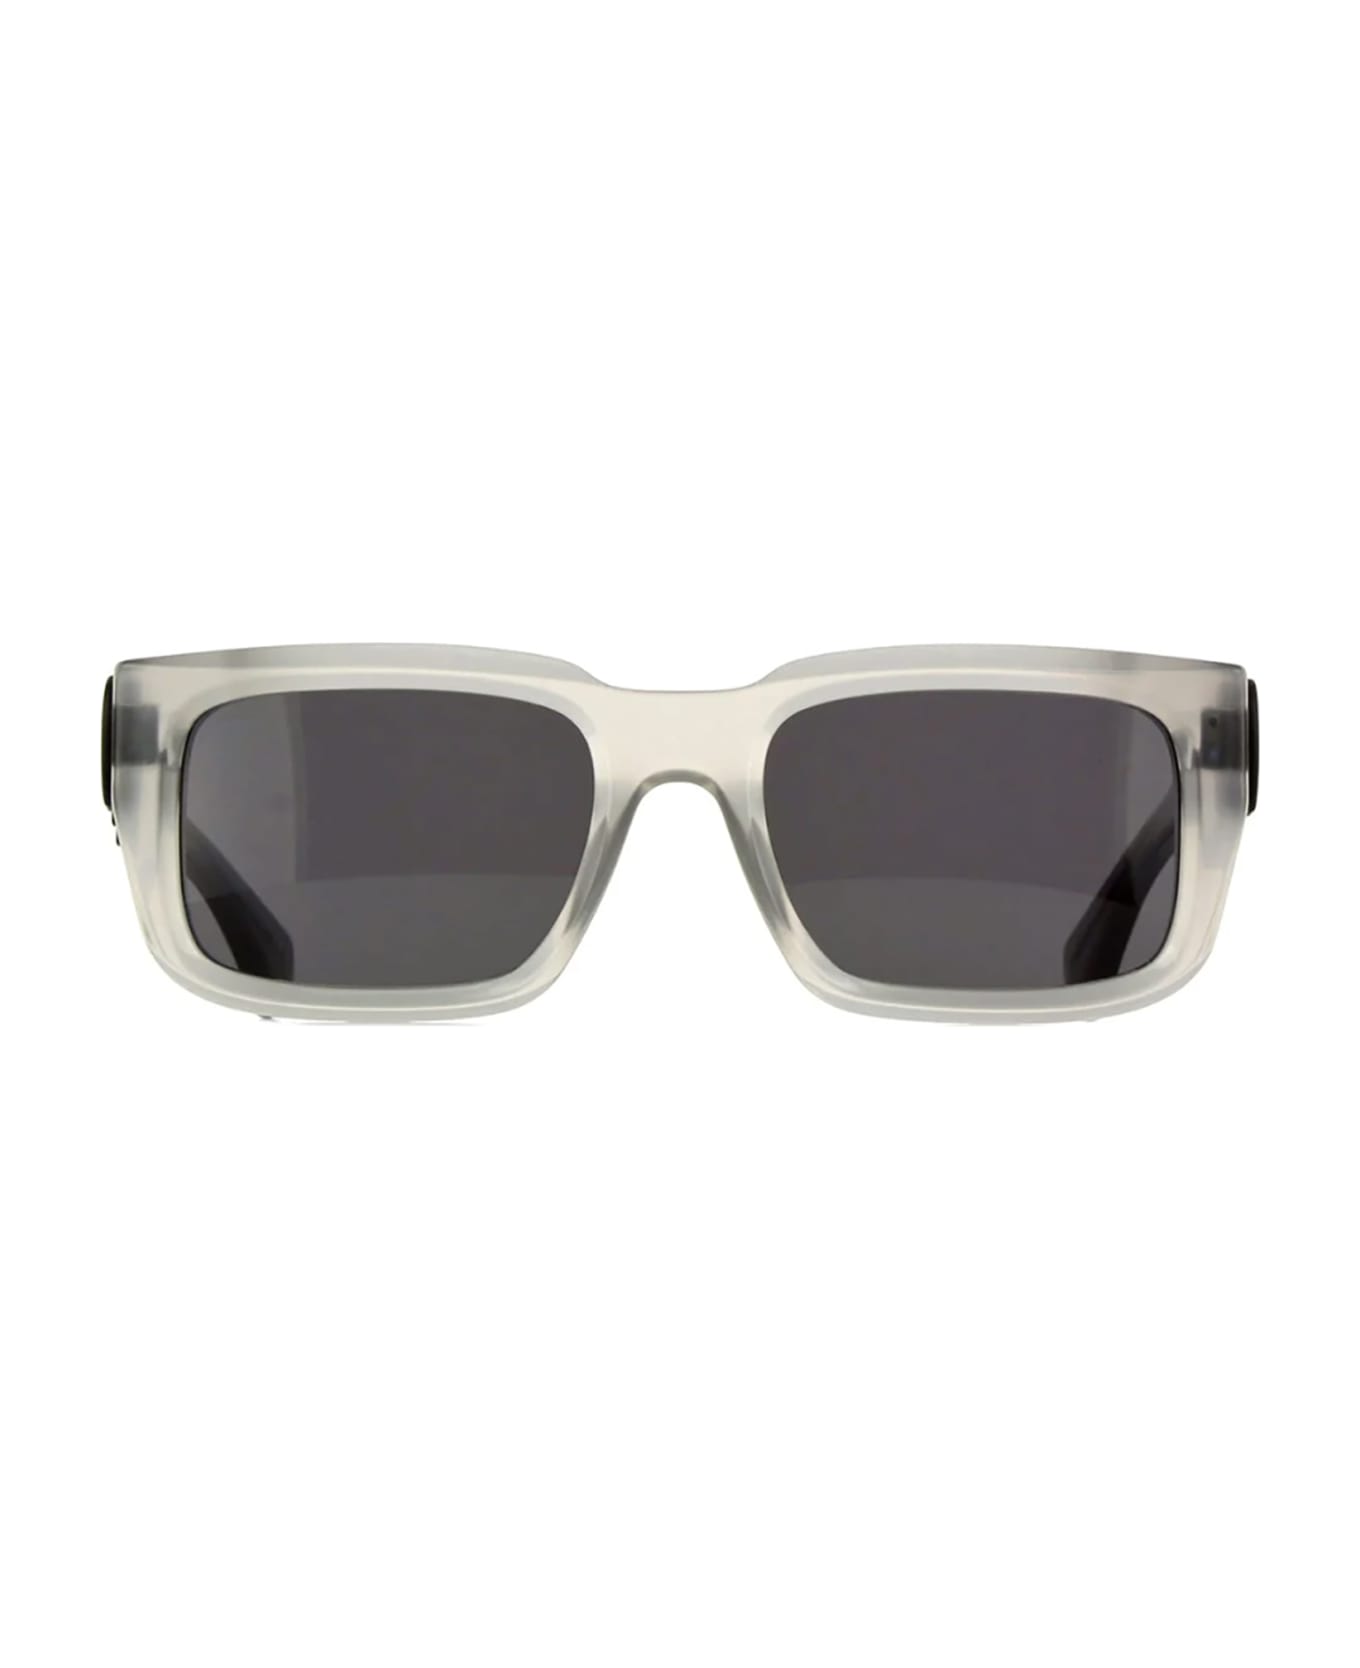 Off-White OERI125 HAYS Sunglasses - Grey